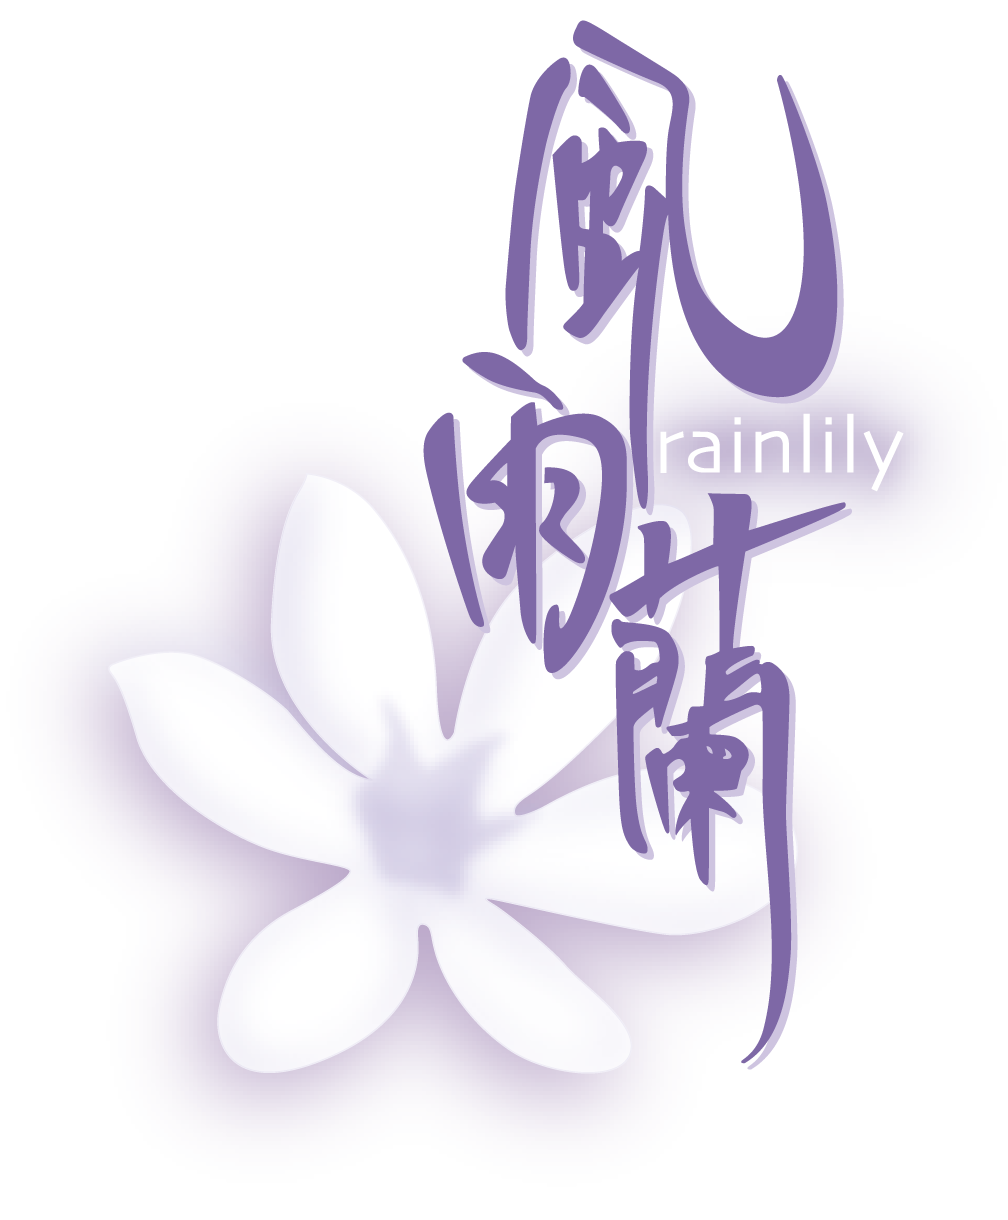 rainlily_logo_ForColorBg.png